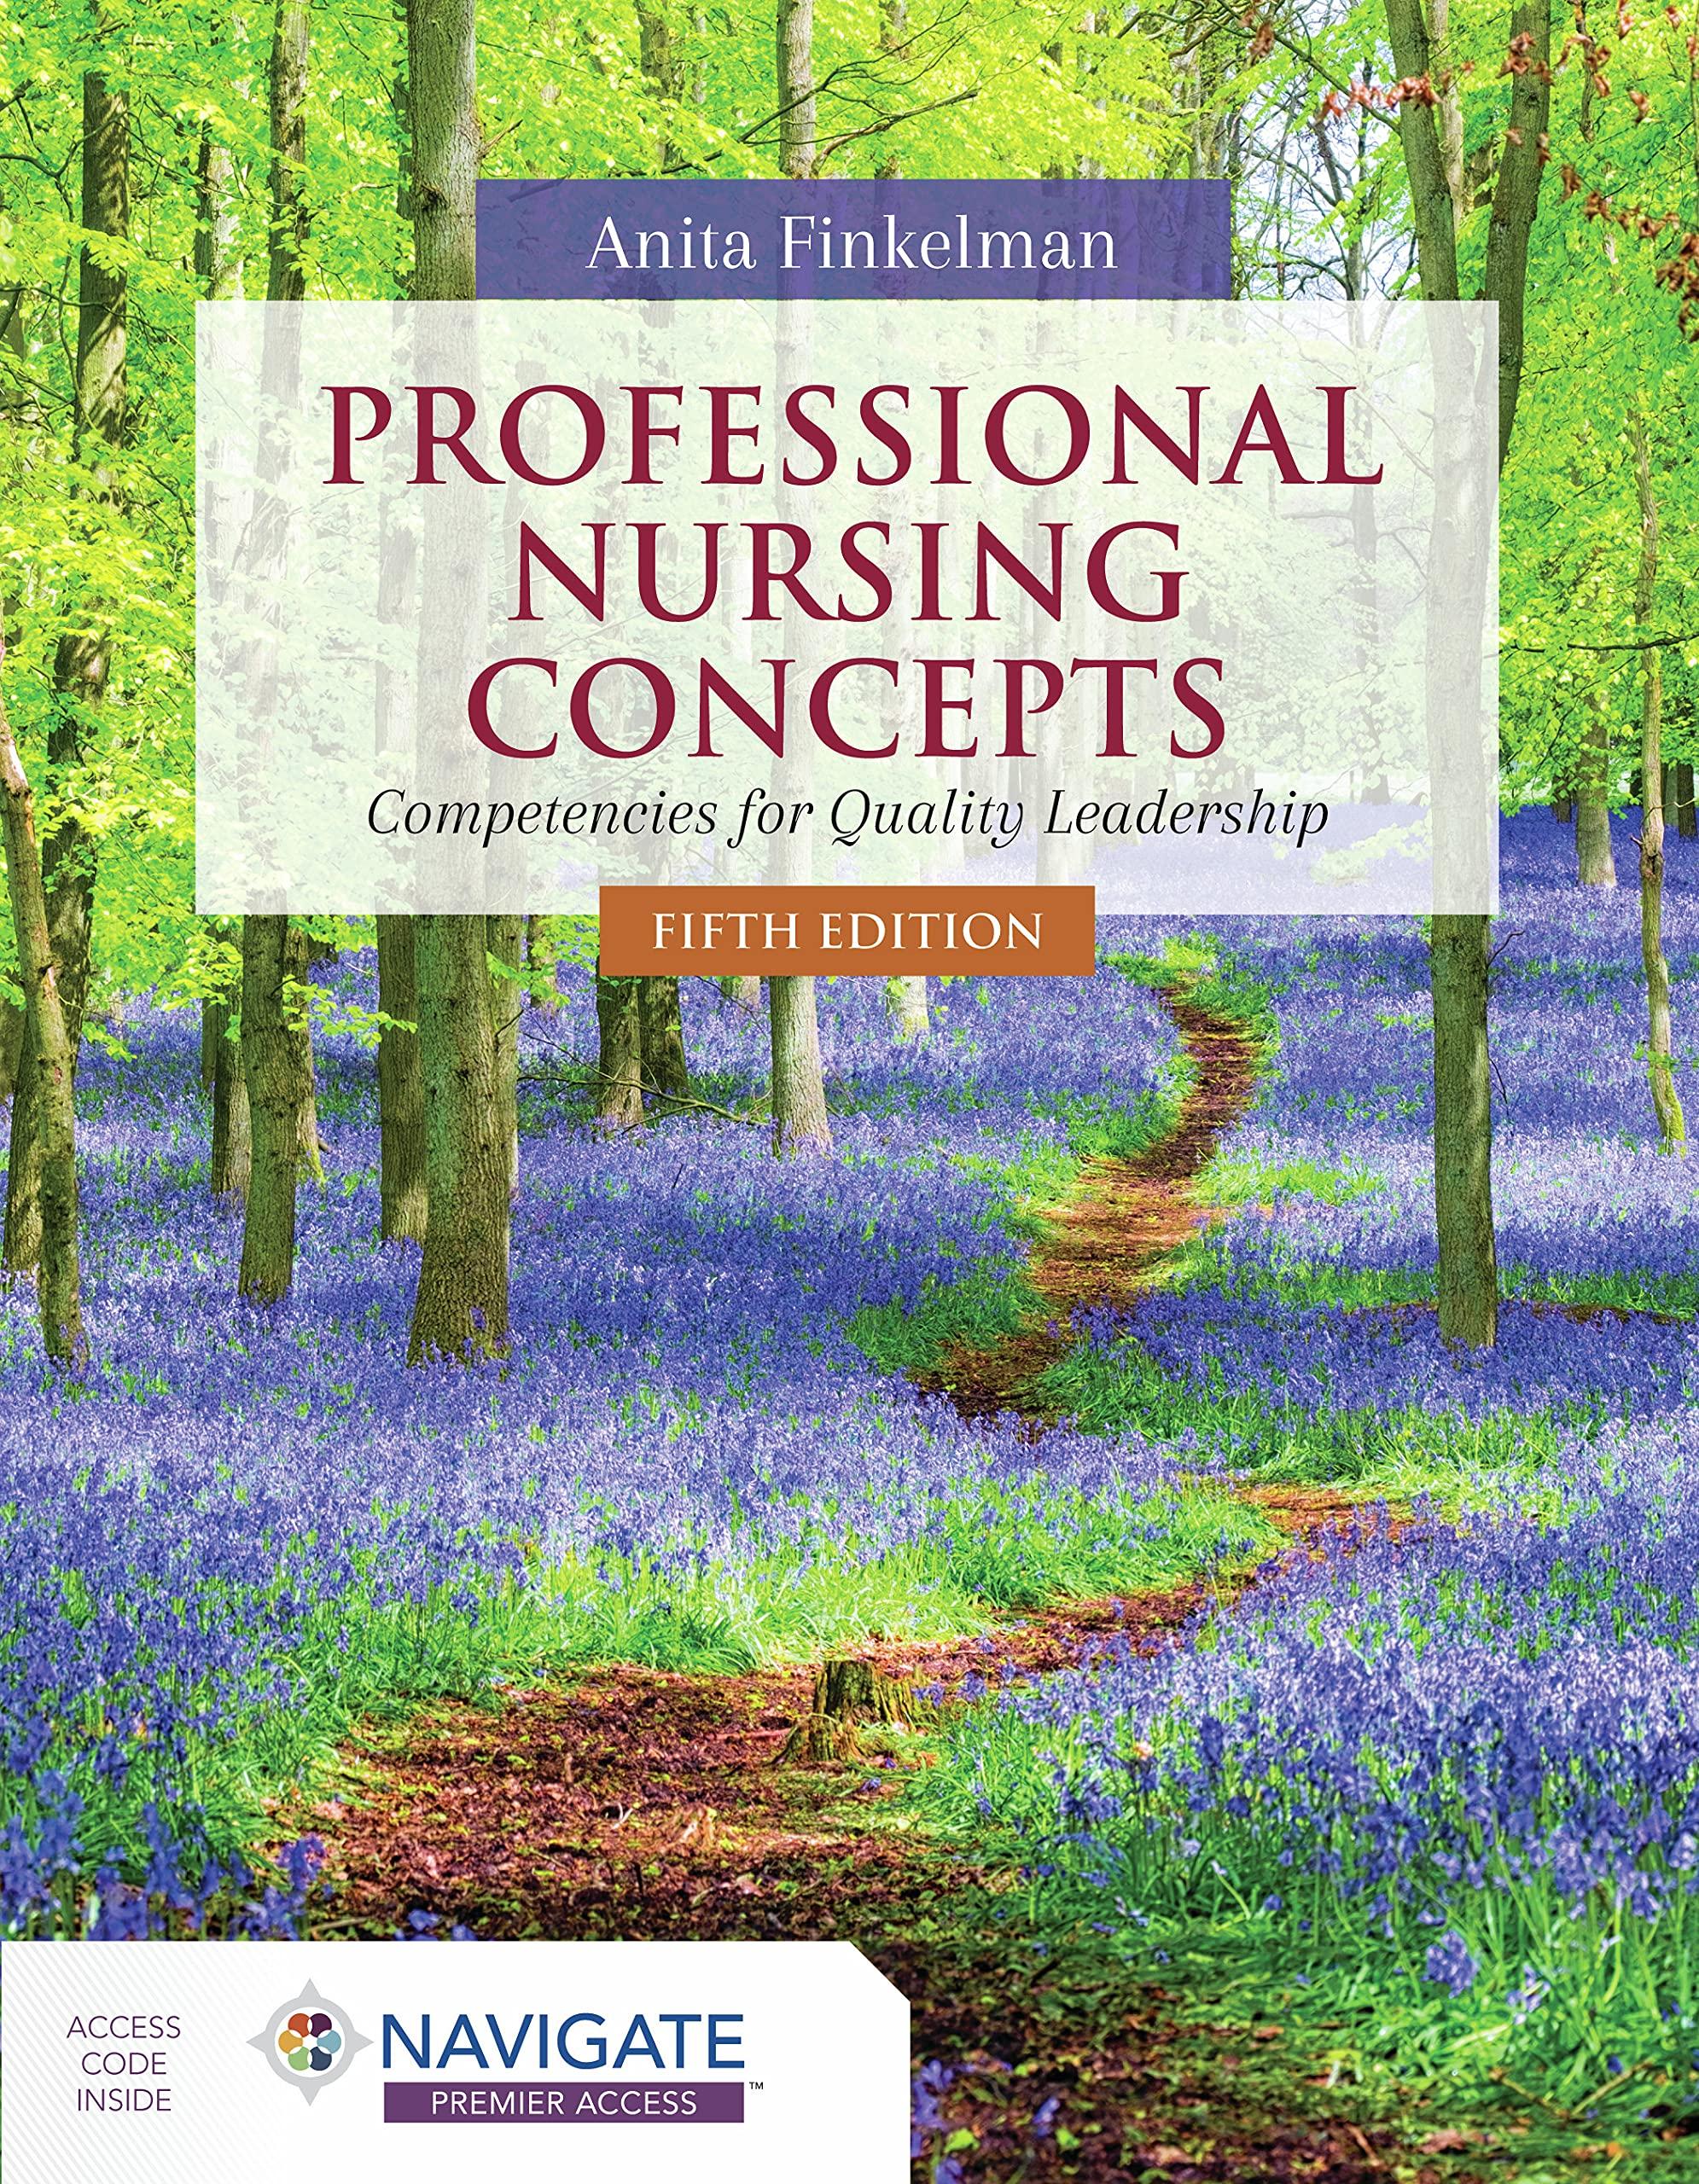 professional nursing concepts competencies for quality leadership 5th edition anita finkelman 1284230880,